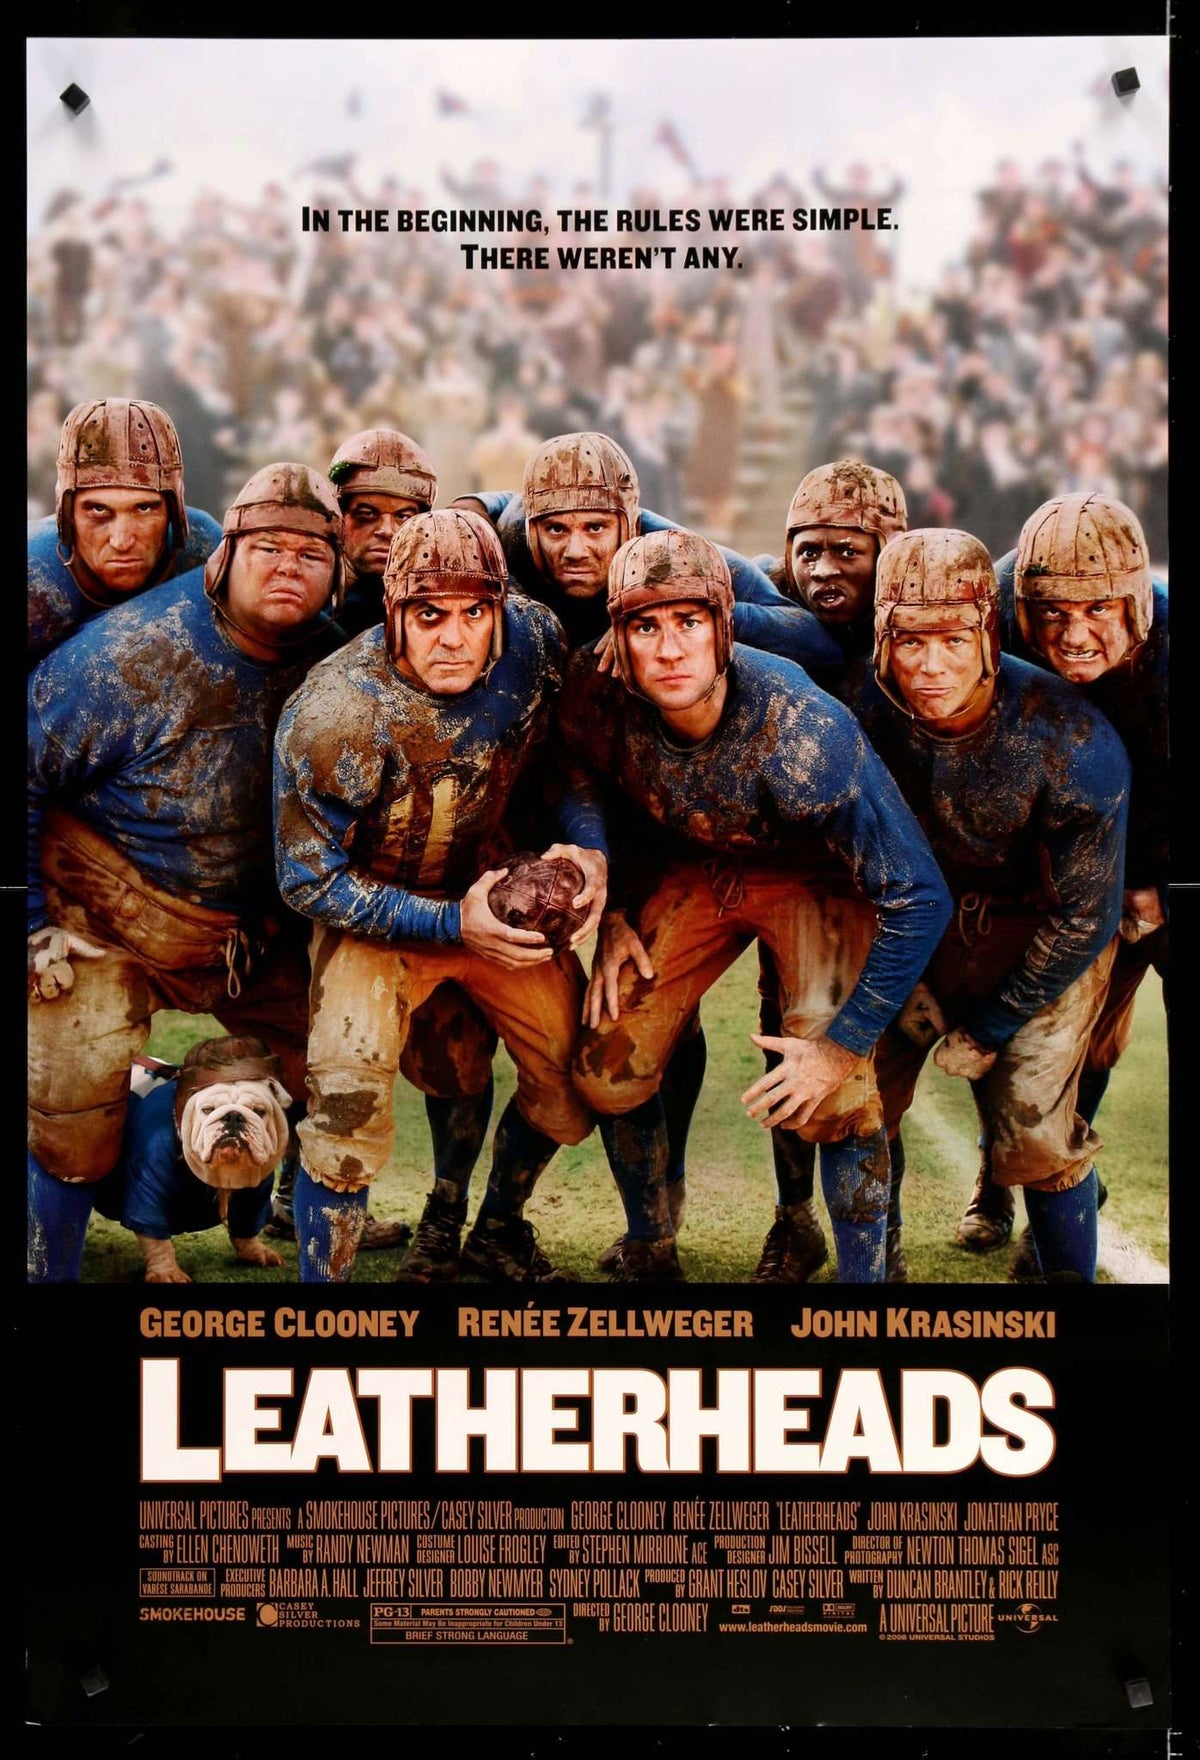 Leatherheads (2008) original movie poster for sale at Original Film Art